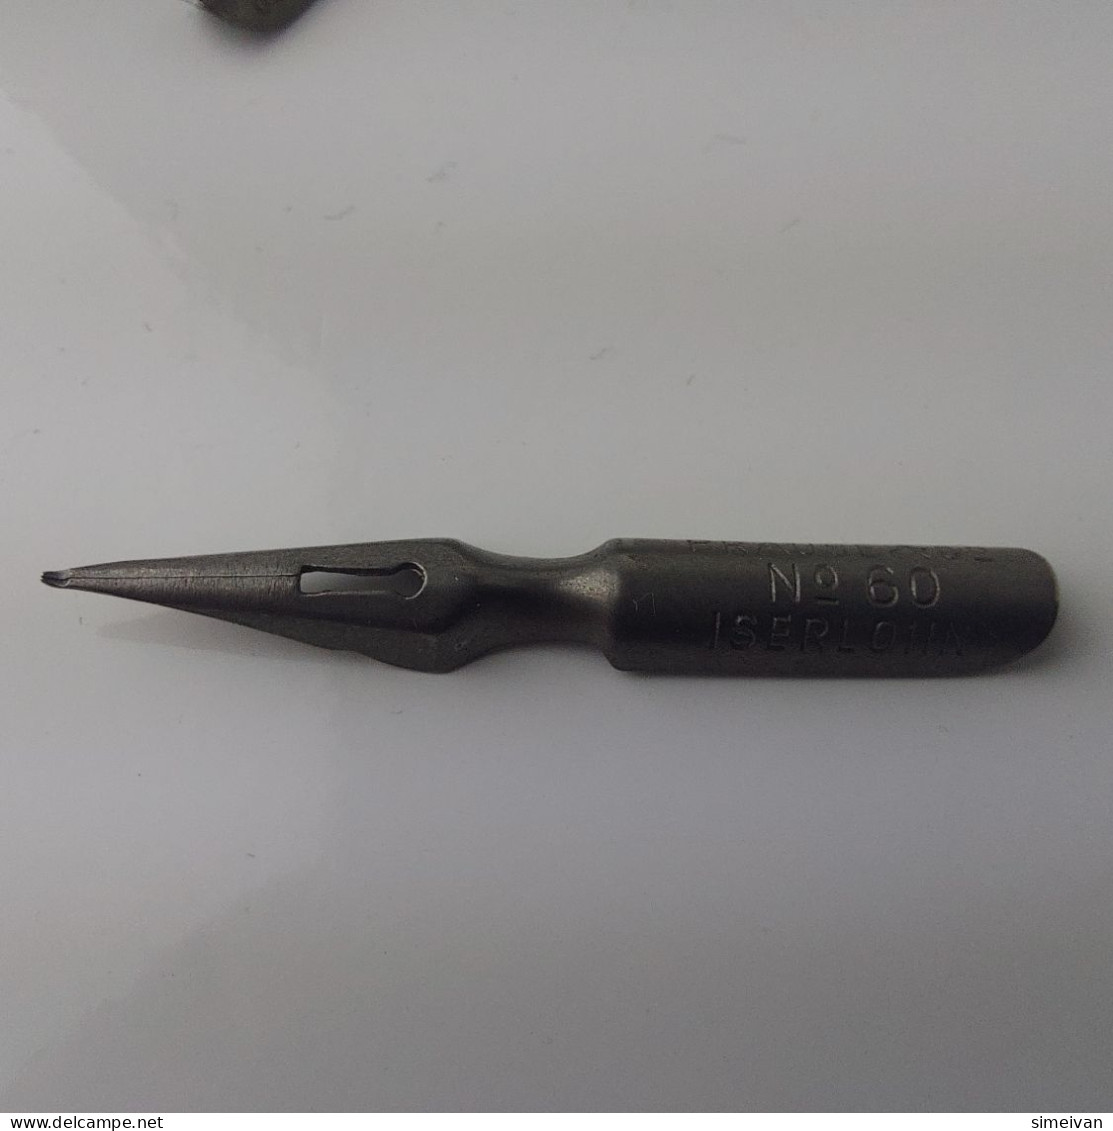 Vintage Dip Pen Nibs BRAUSE & Co No. 60 ISERLOHN Feder 16 Pcs Calligraphy #5563 - Lapiceros